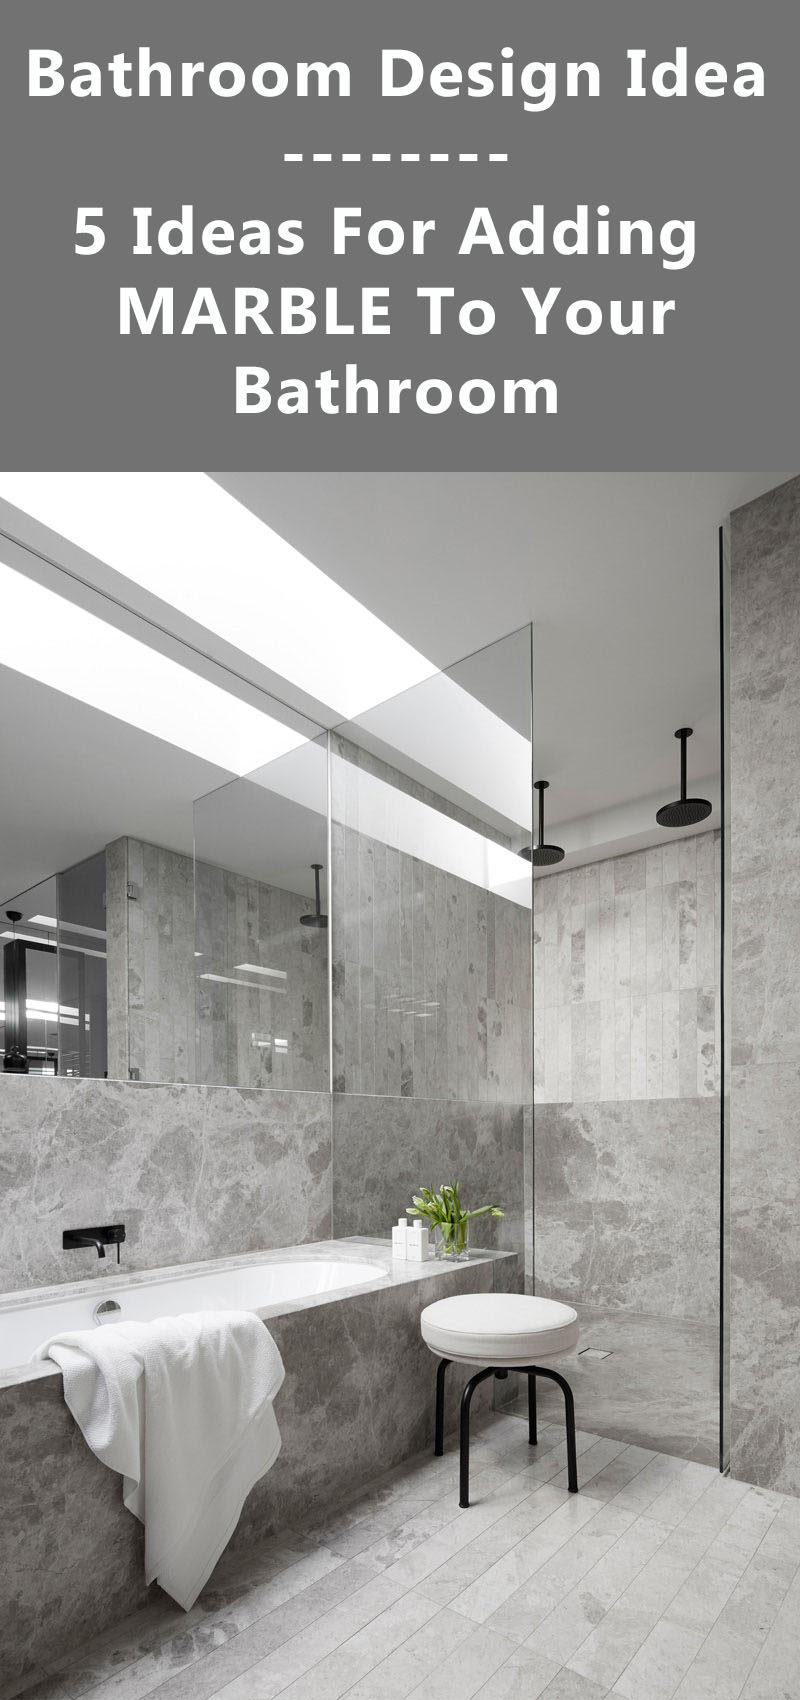 Bathroom Design Idea - 5 Ideas For Adding Marble To Your Bathroom